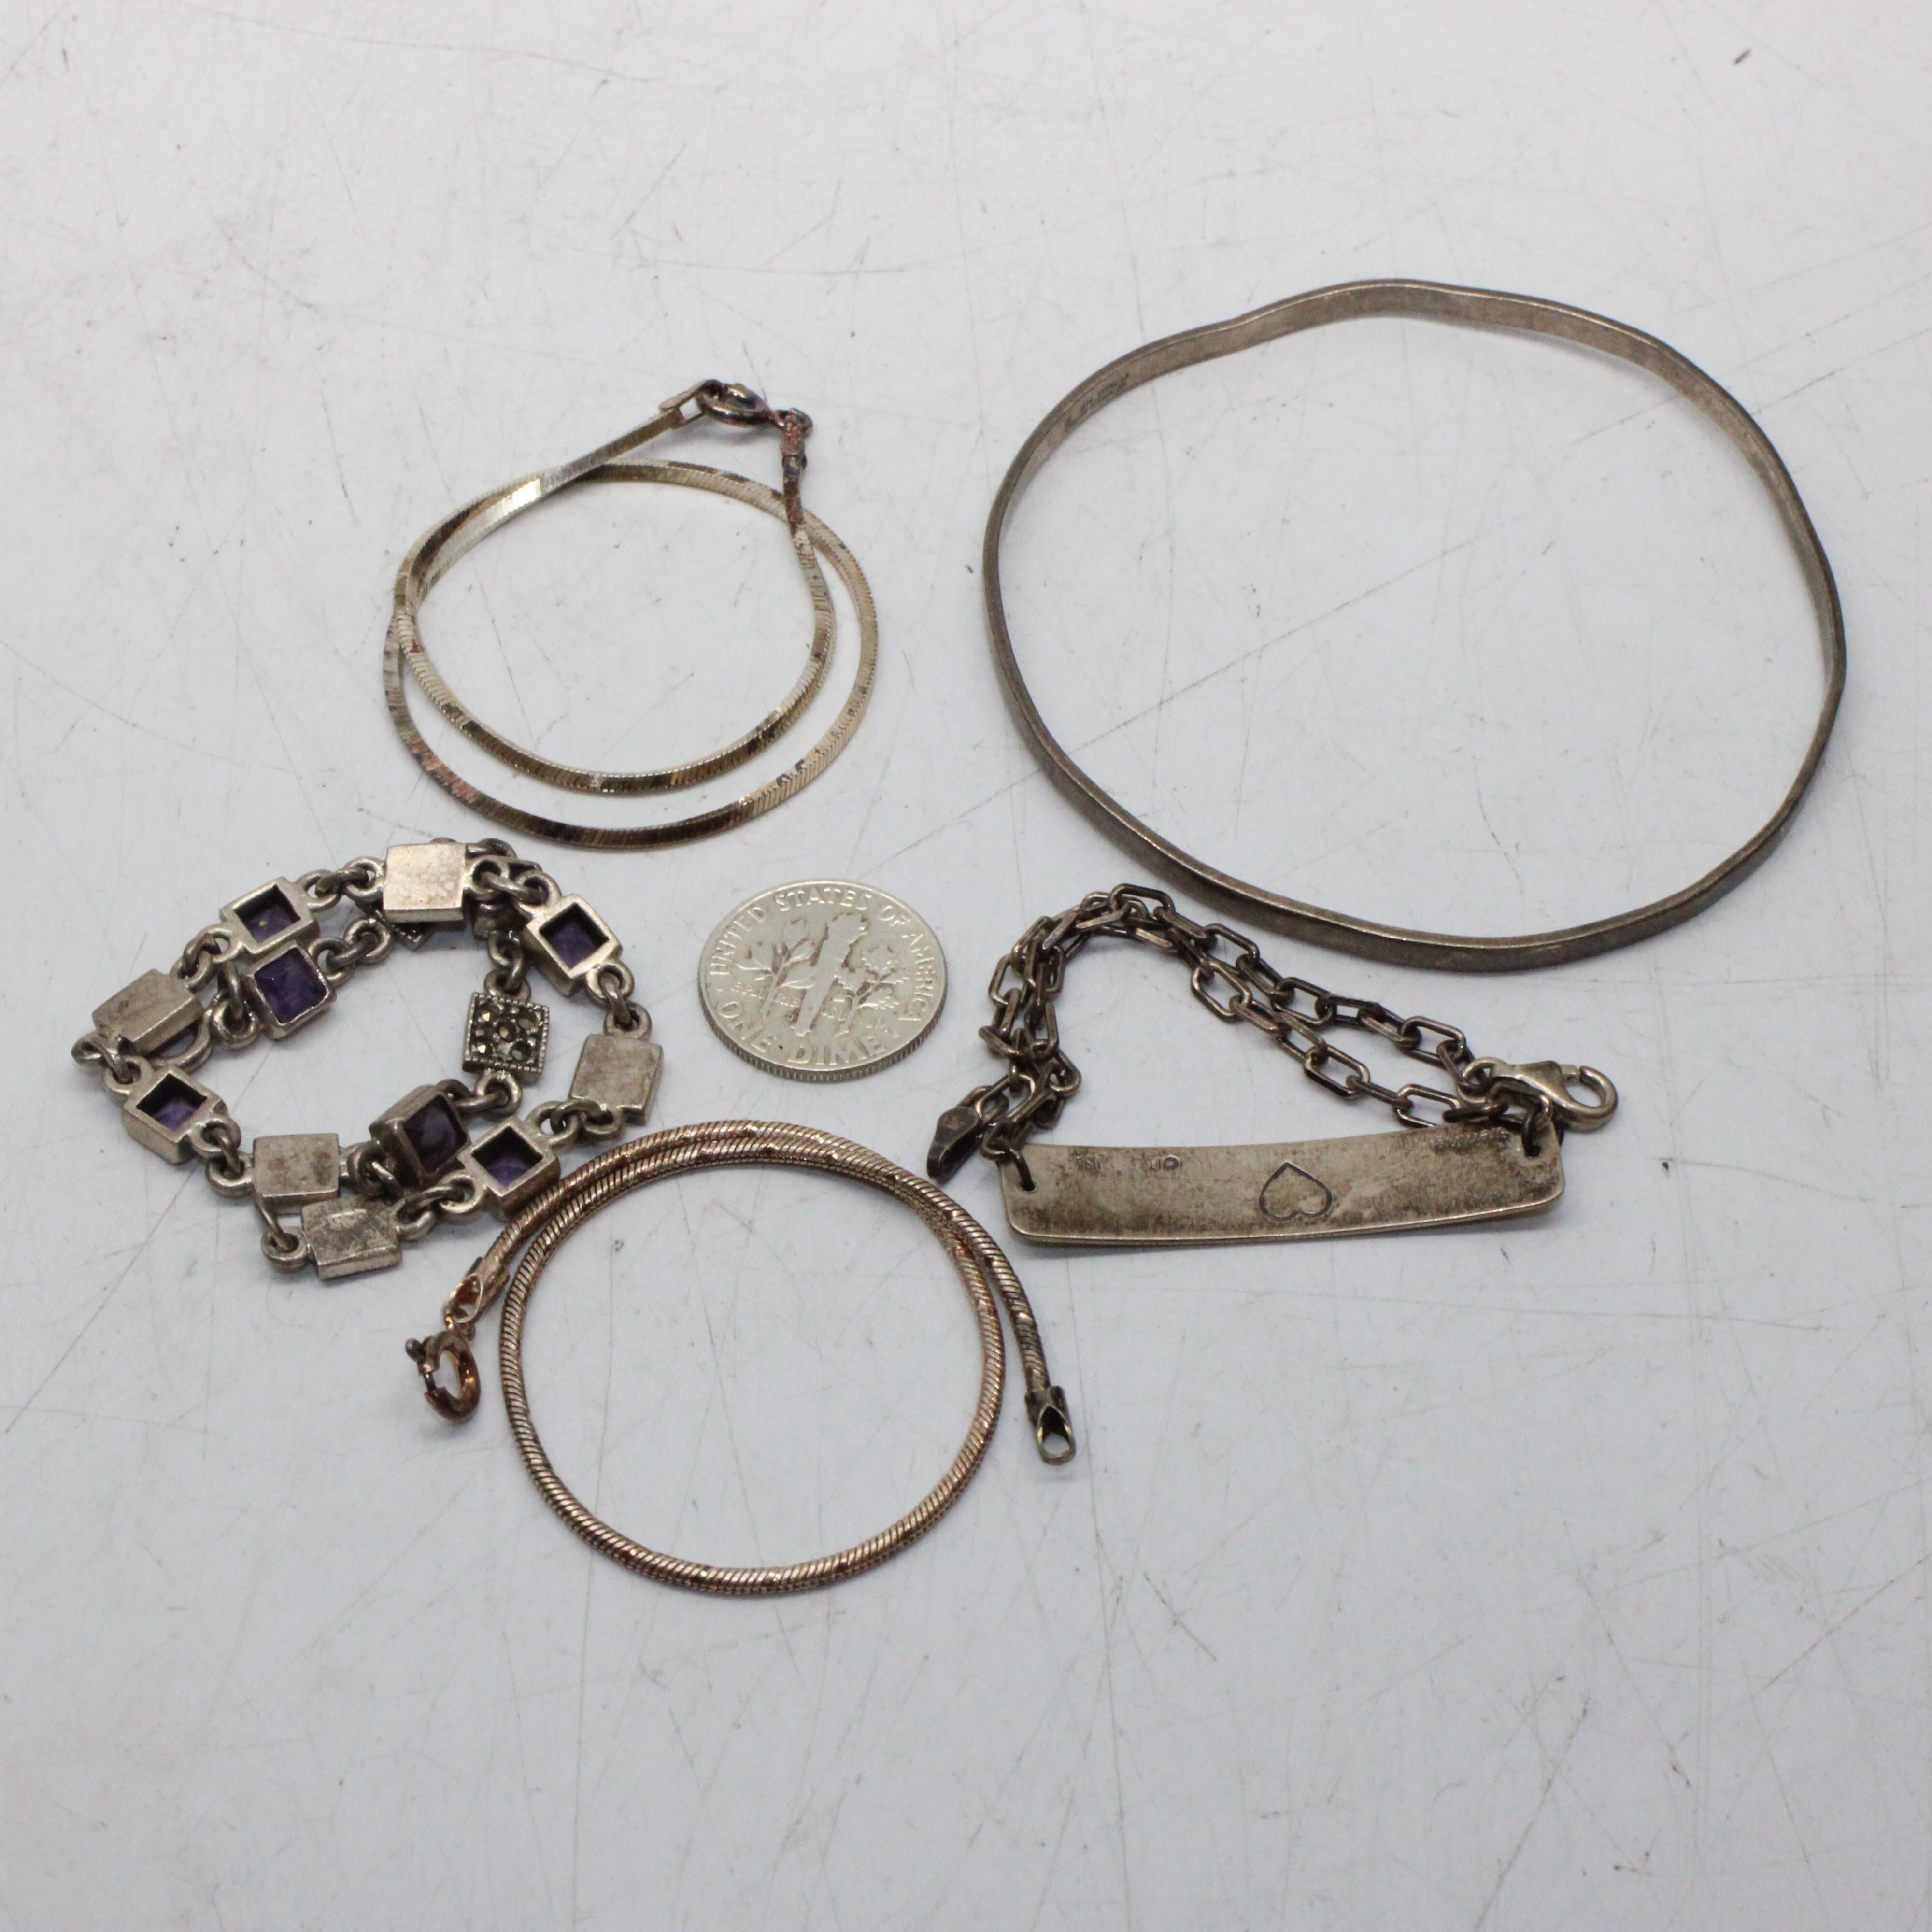 Lot of 7 Vintage Sterling Silver Bracelets, 3 Marked Danecraft | eBay